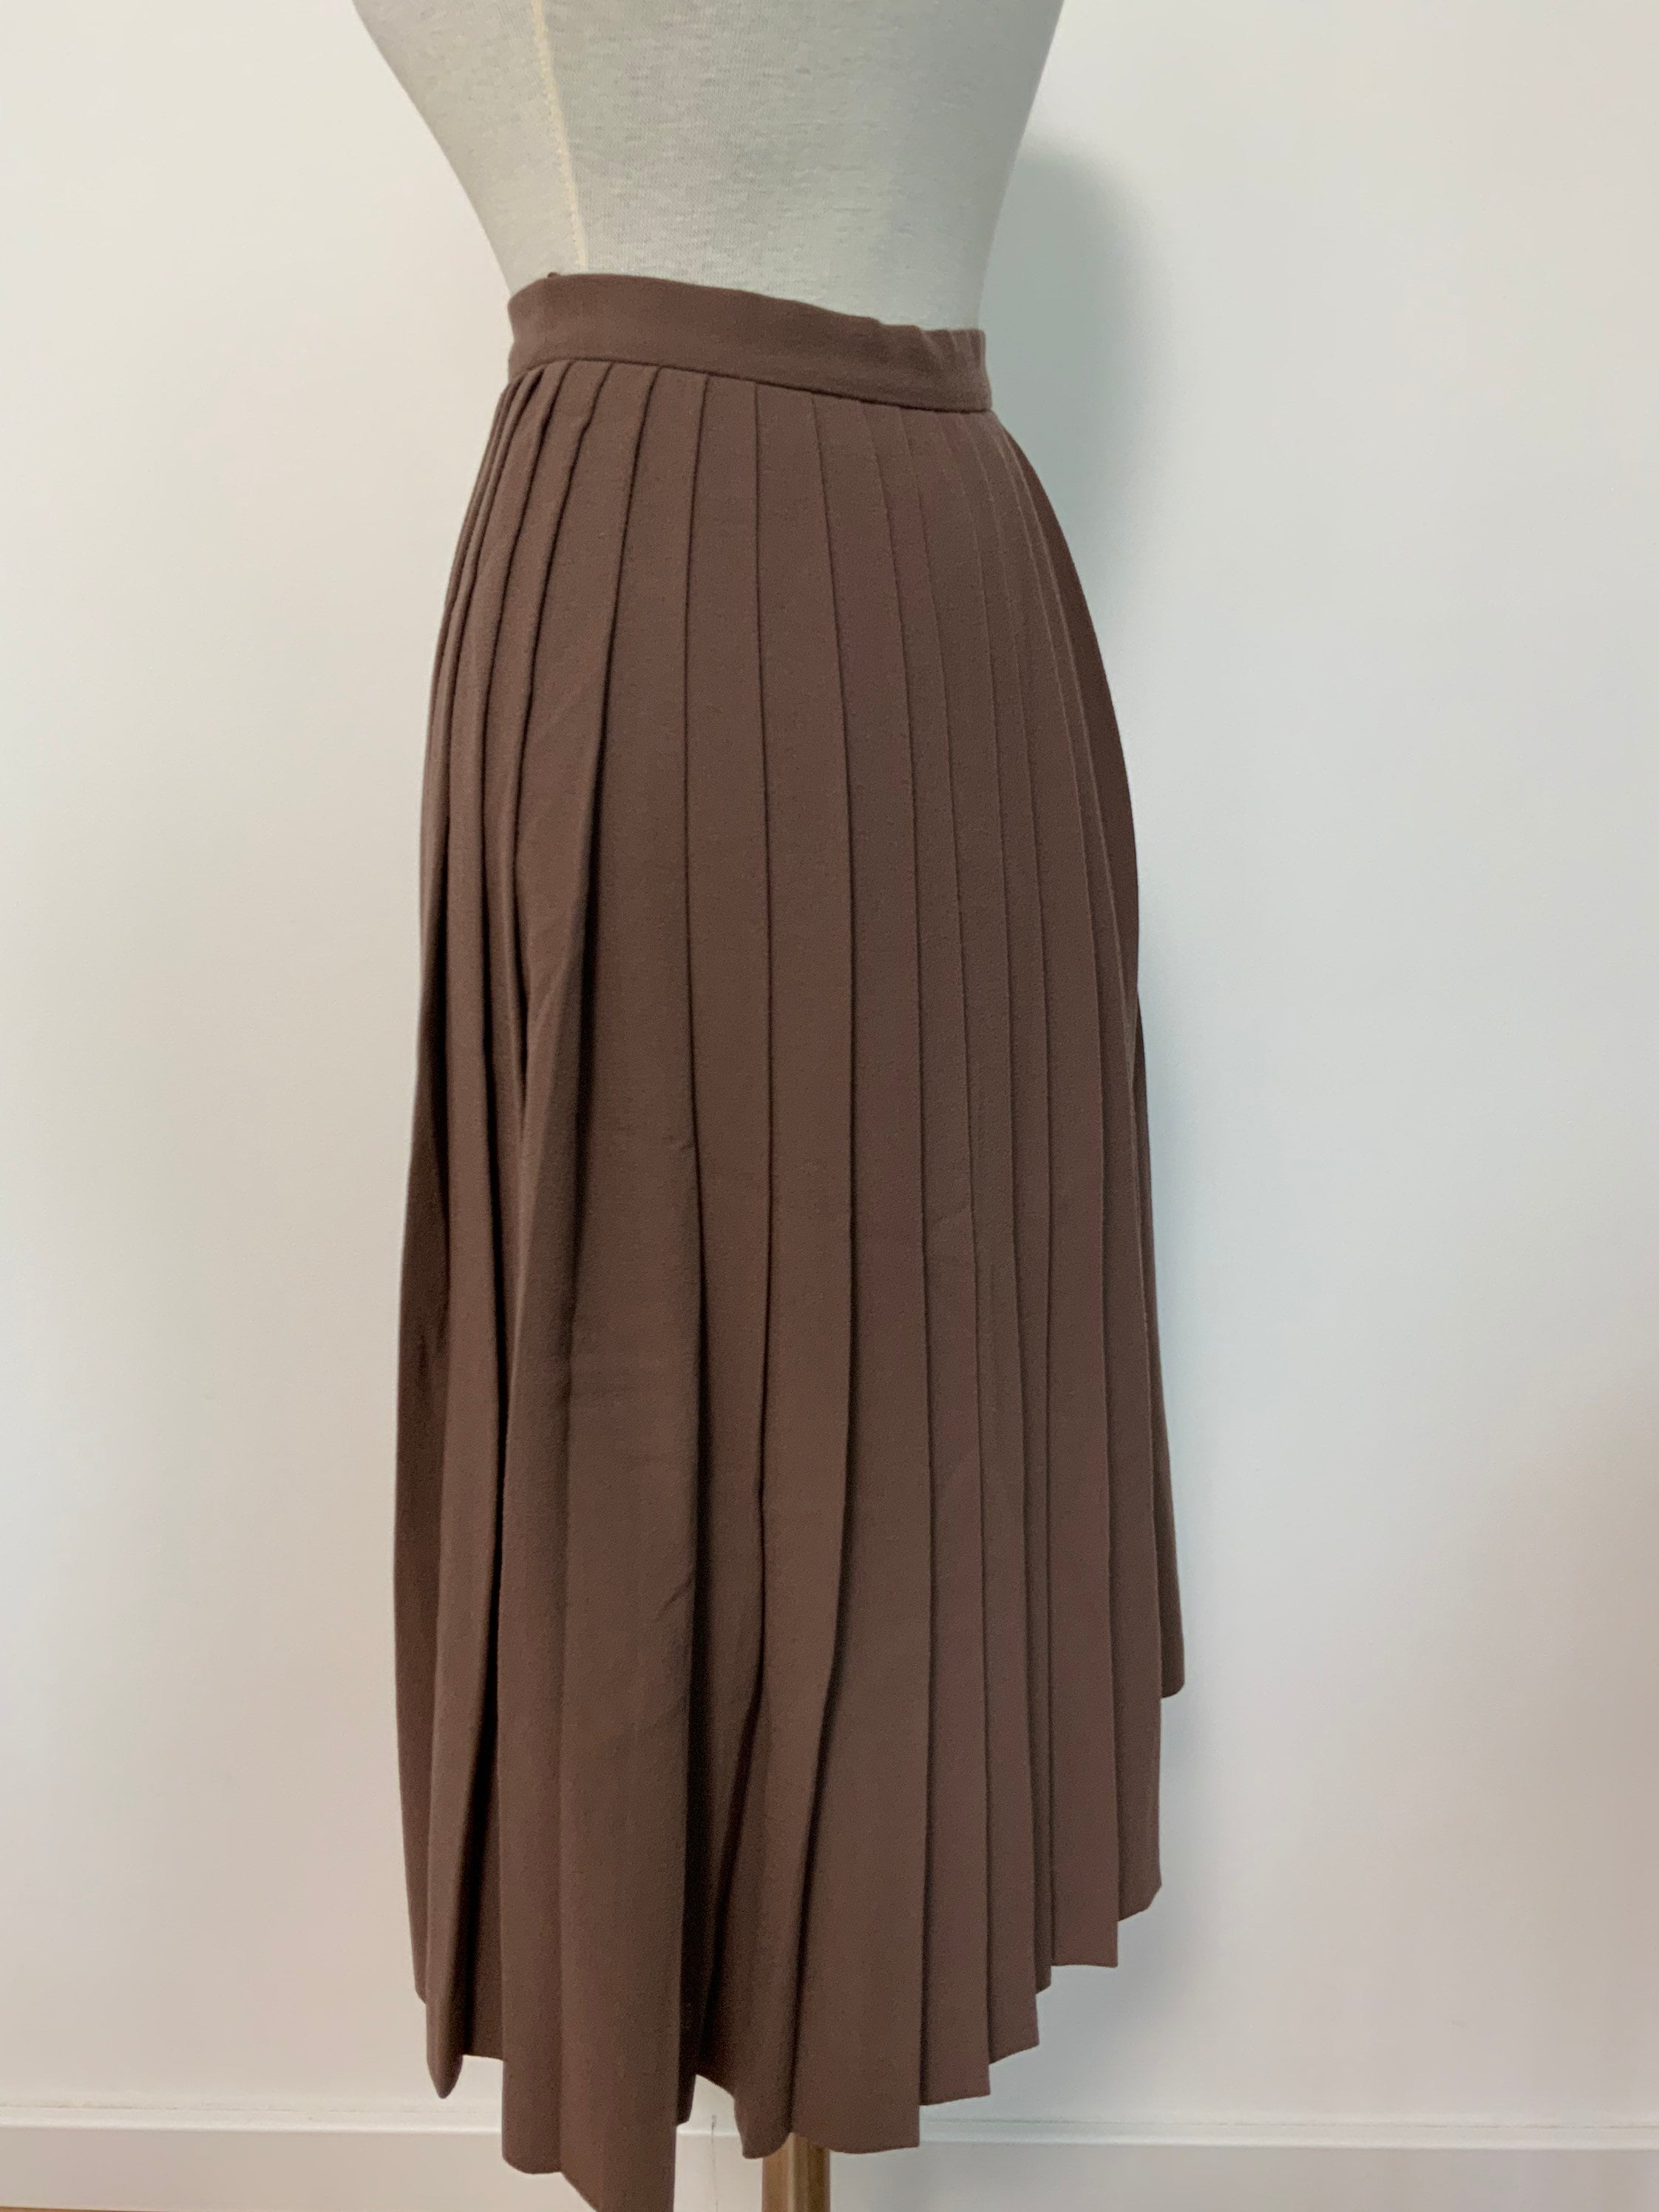 Christian DIOR Vintage pleated skirt brown skirt wool | Etsy